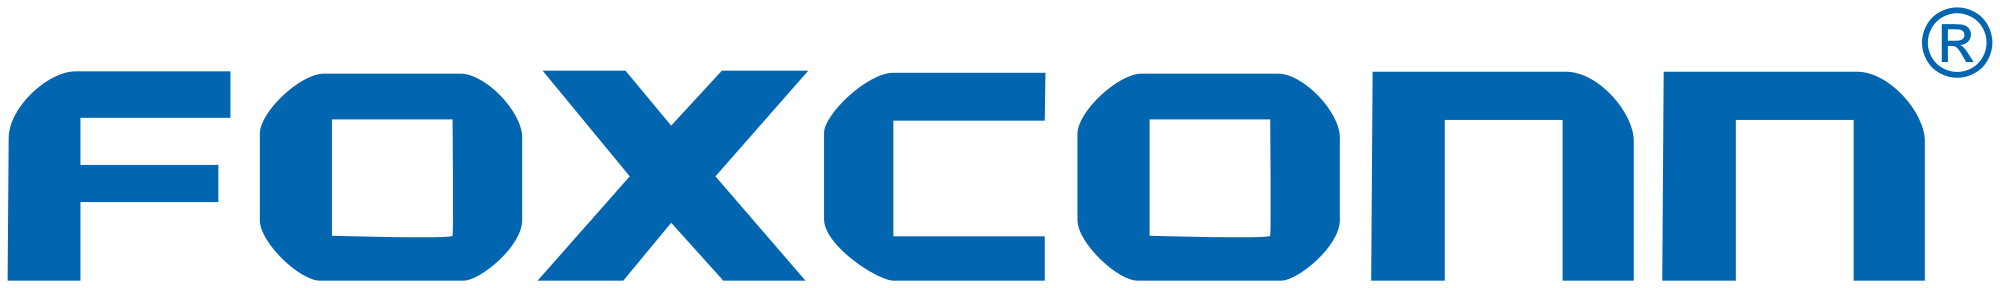 Foxconn Brand Logo